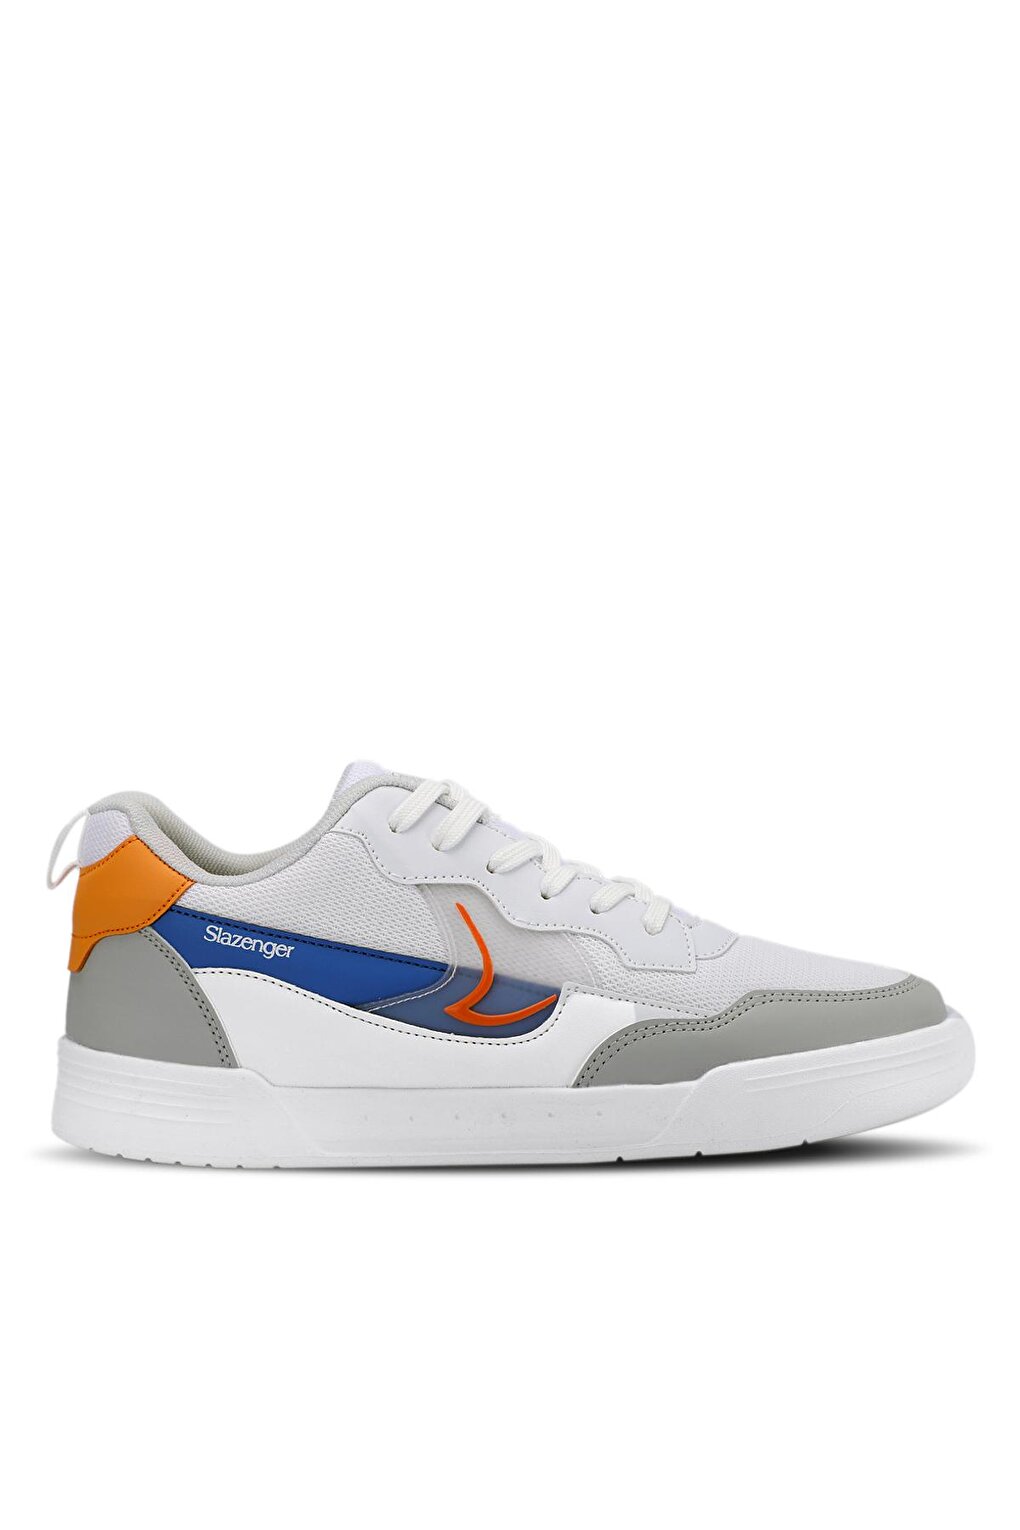 BARBRO Sneaker Мужская обувь Белый/Оранжевый SLAZENGER